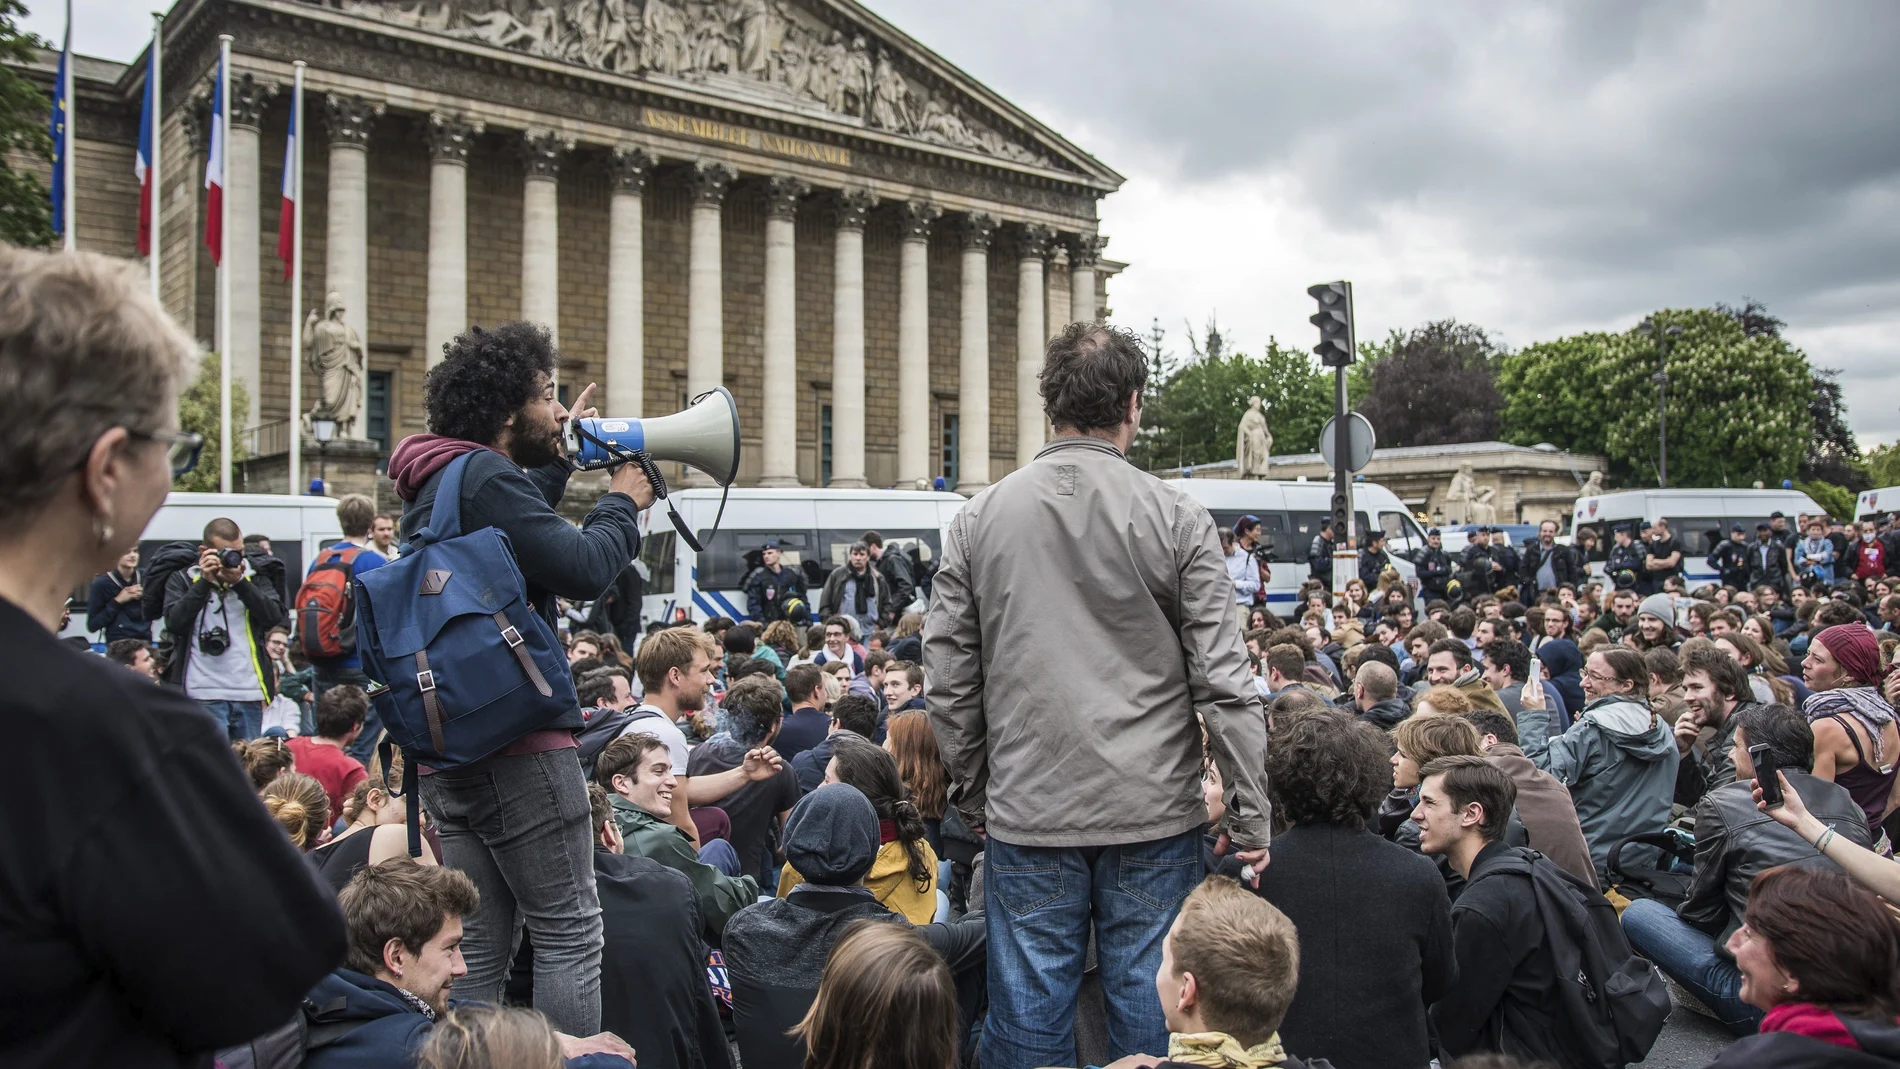 Manifestación en Francia